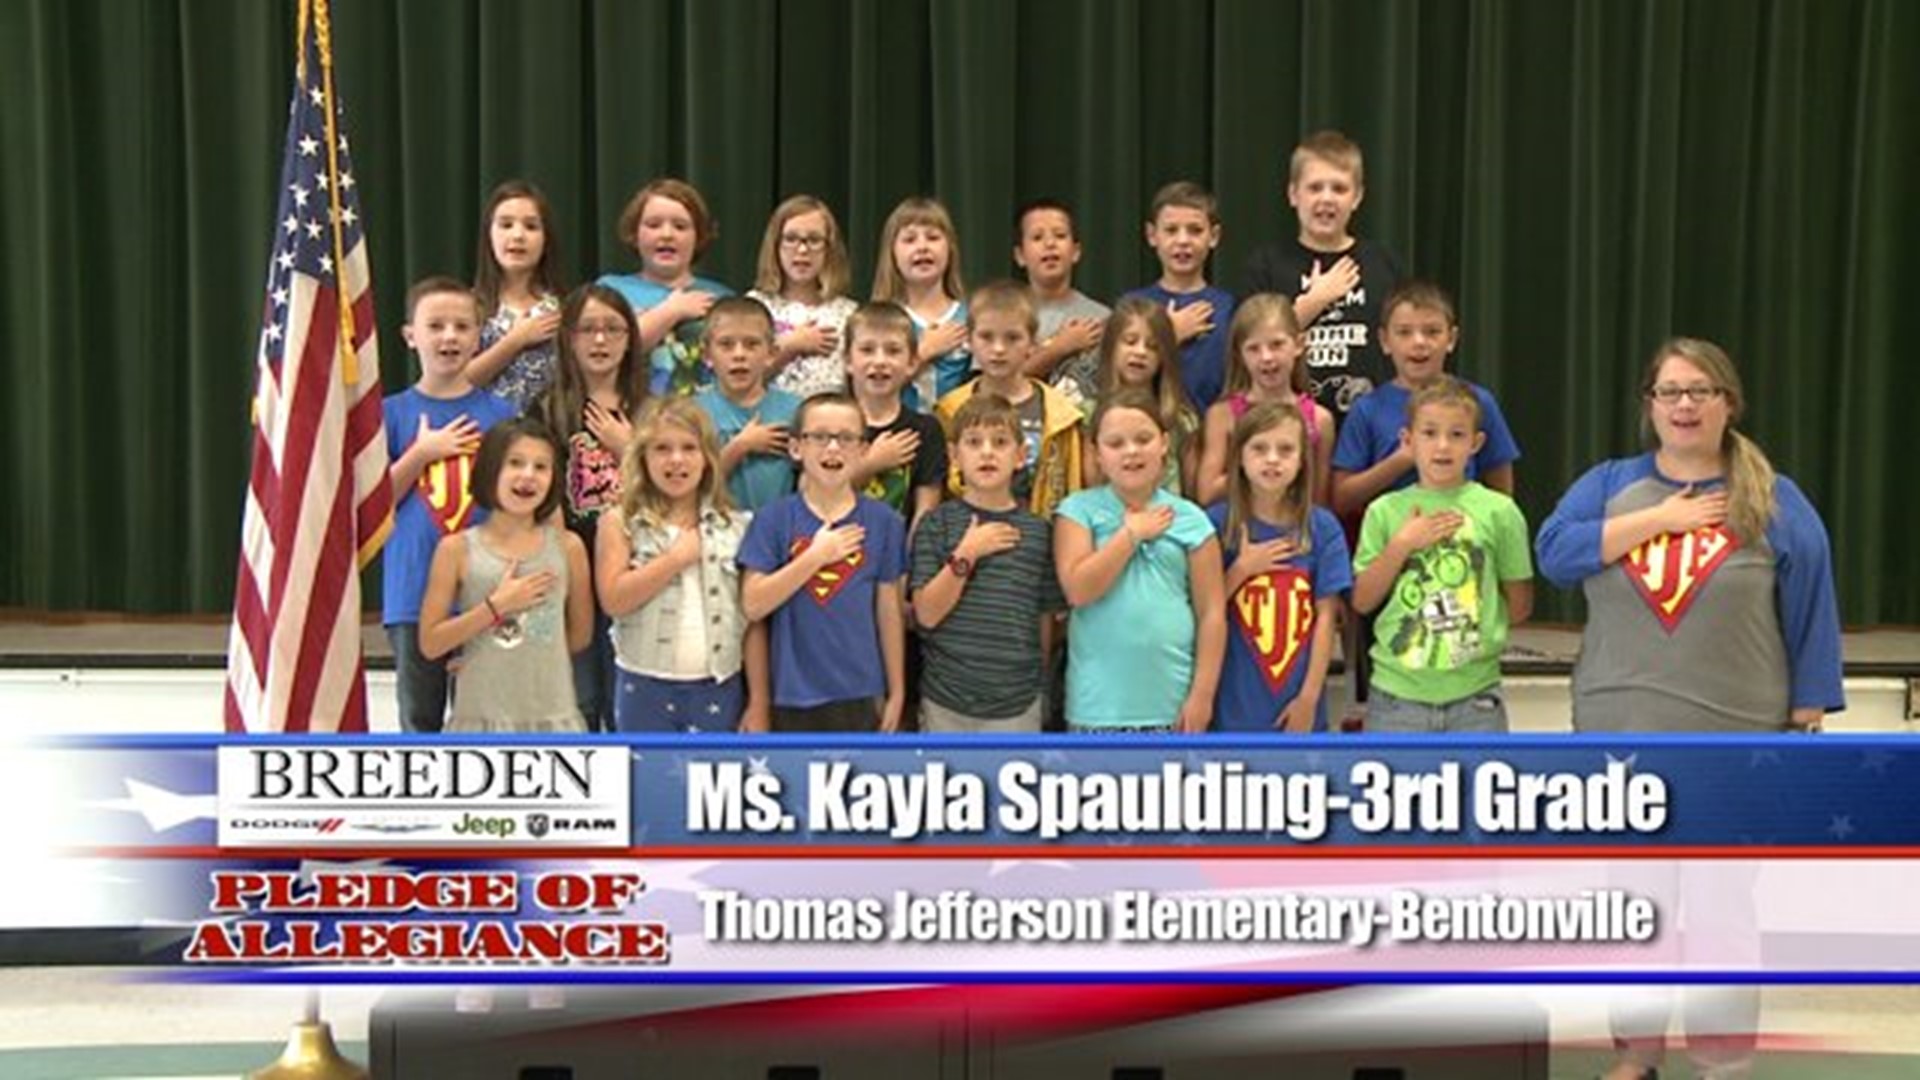 Thomas Jefferson Elementary, Bentonville - Ms. Kayla Spaulding - 3rd Grade